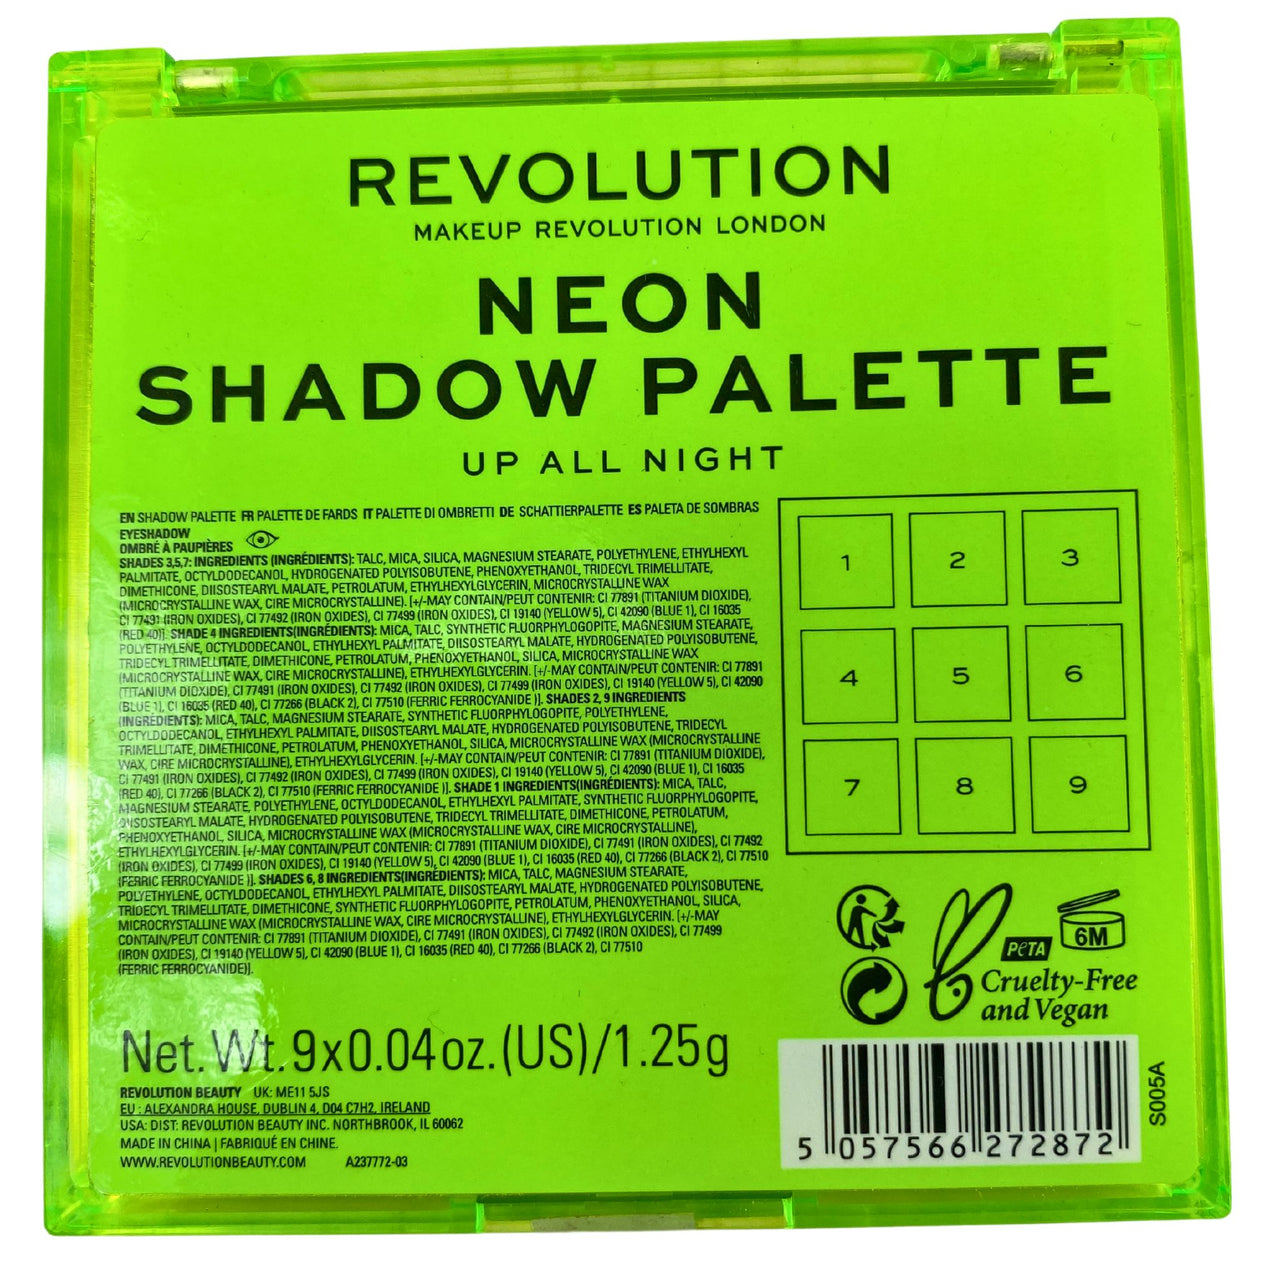 Revolution Makeup Revolution London Neon Shadow Palette Up All Night 9x0.04OZ